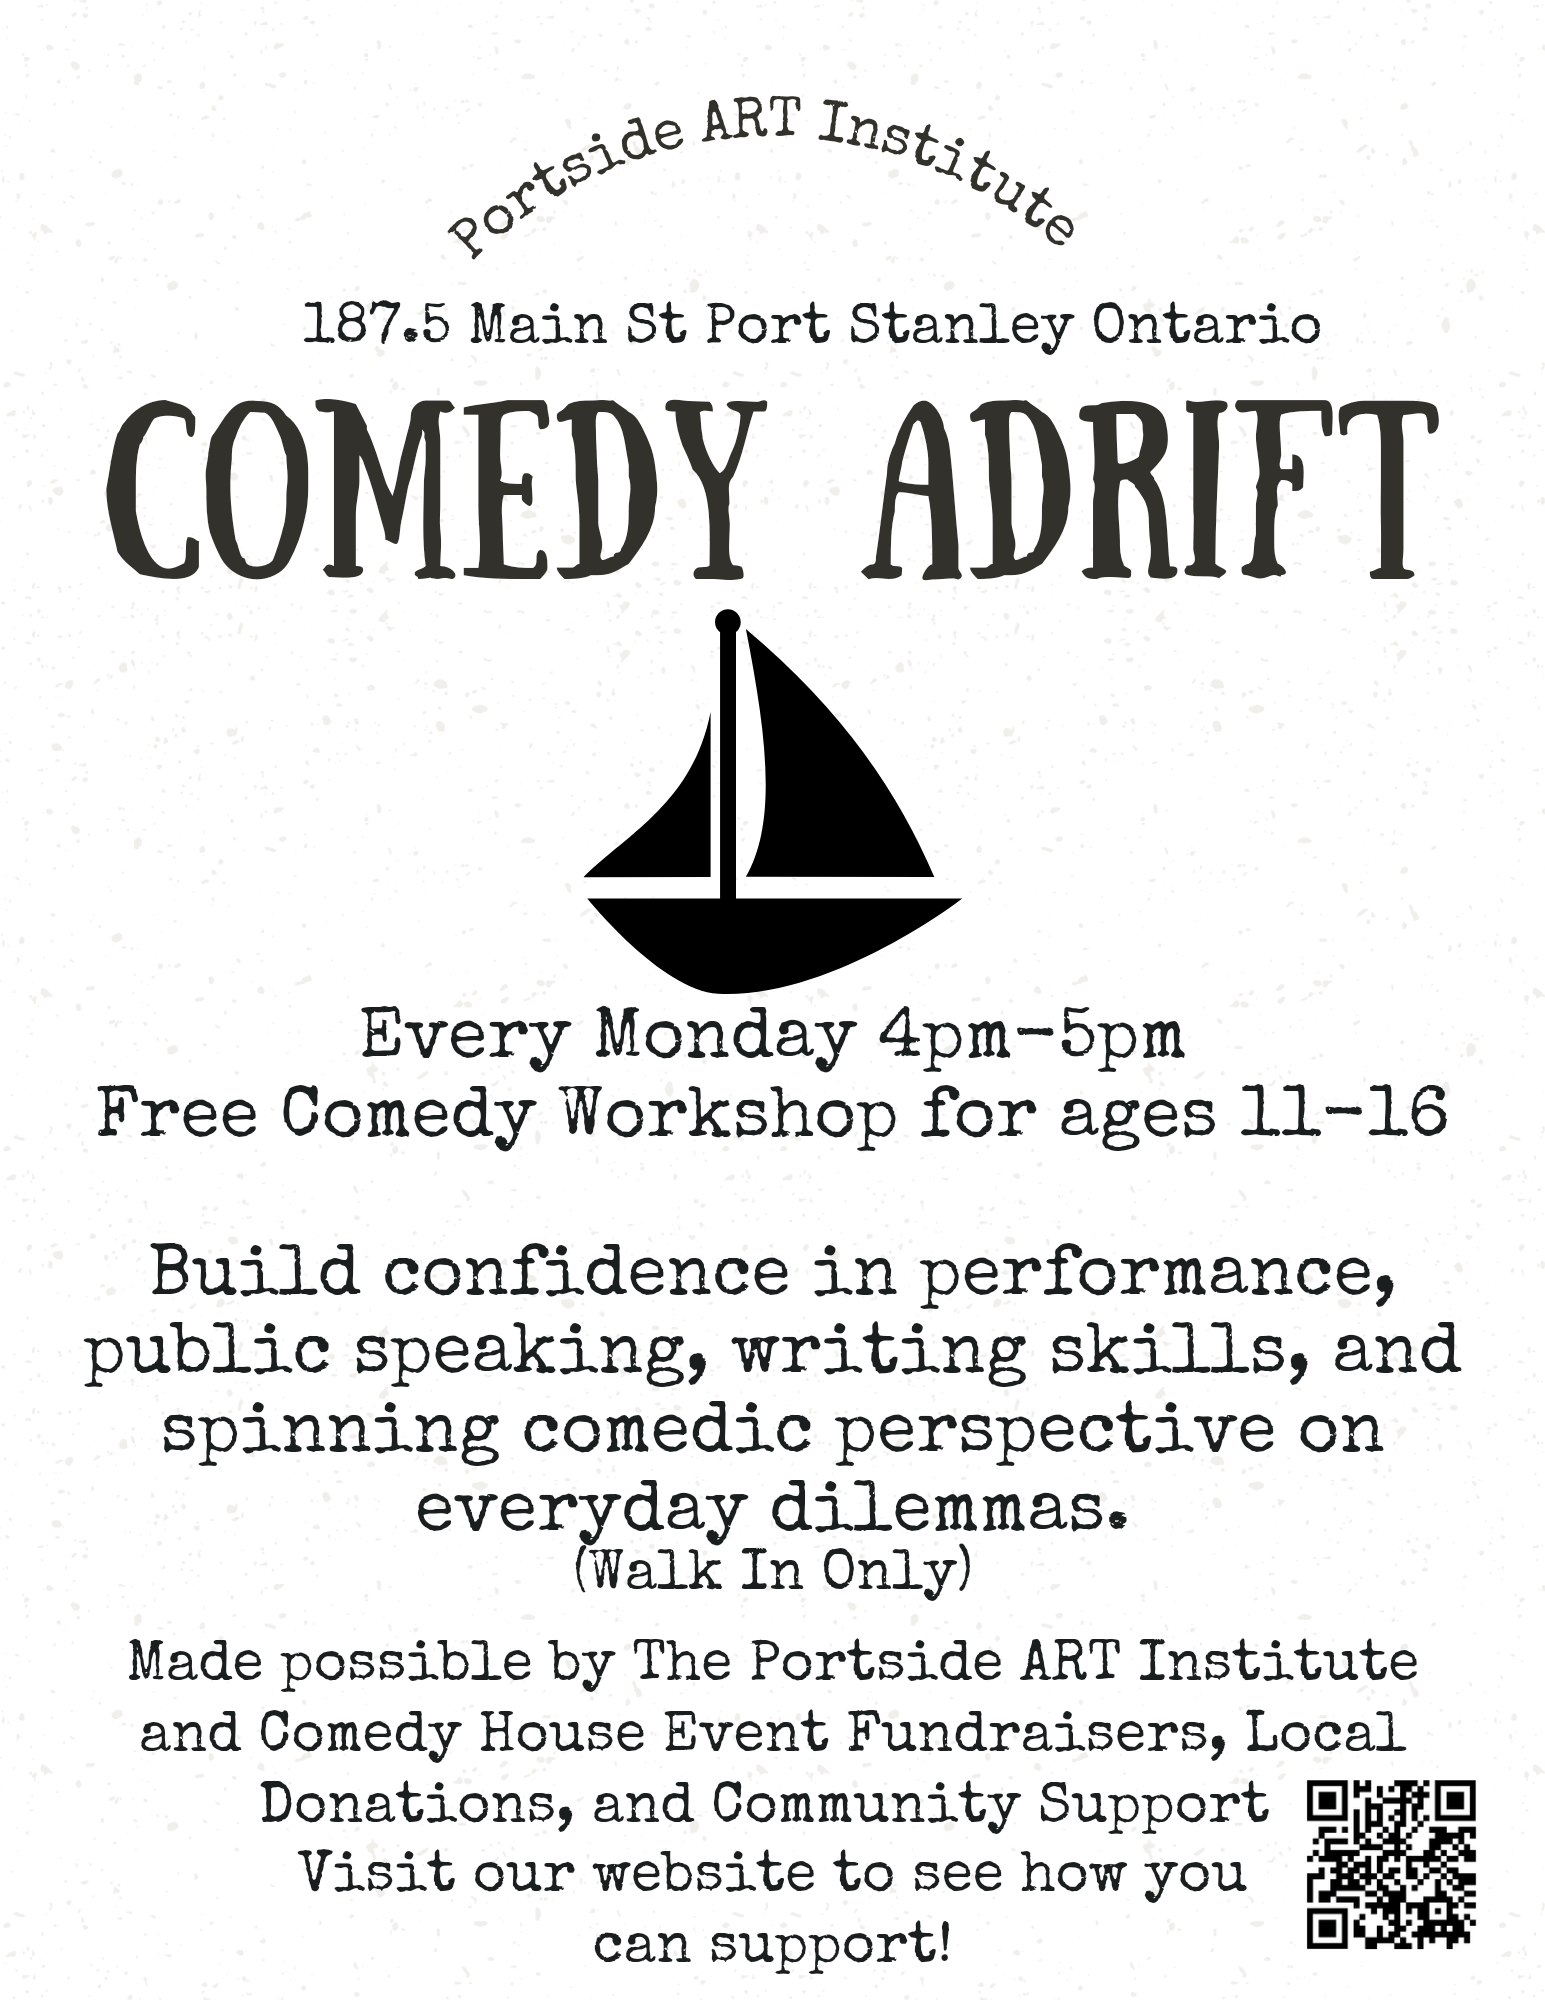 Comedy Adrift